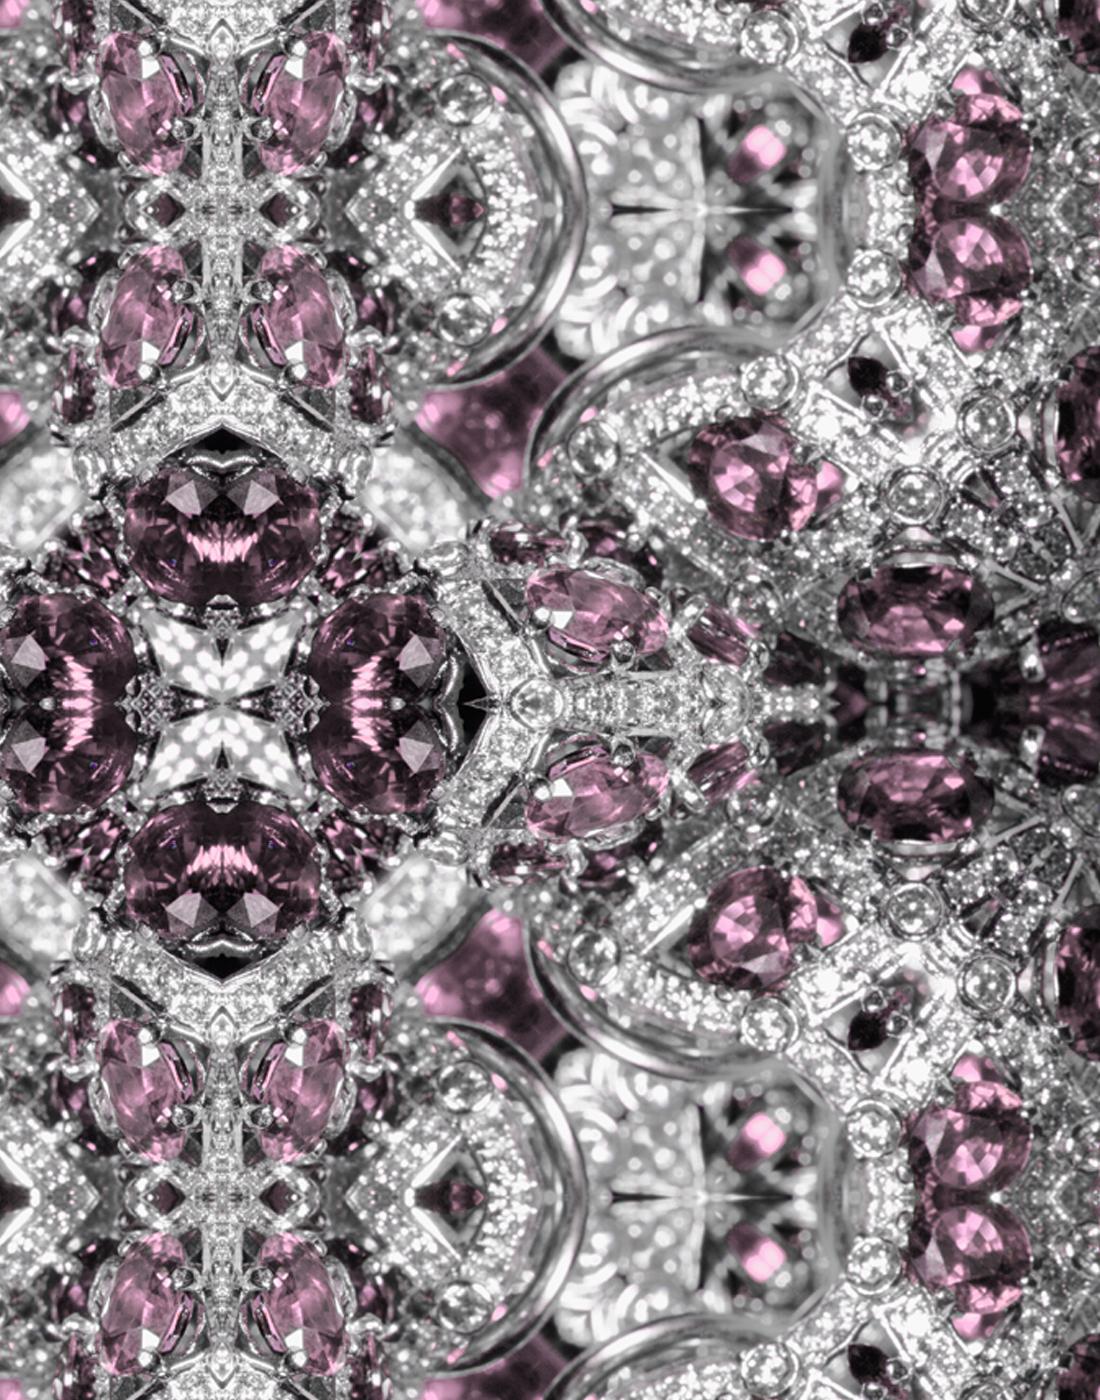  EDGE Kollektion Diamant-Blumenblumen-Serie Rubin im Angebot 1